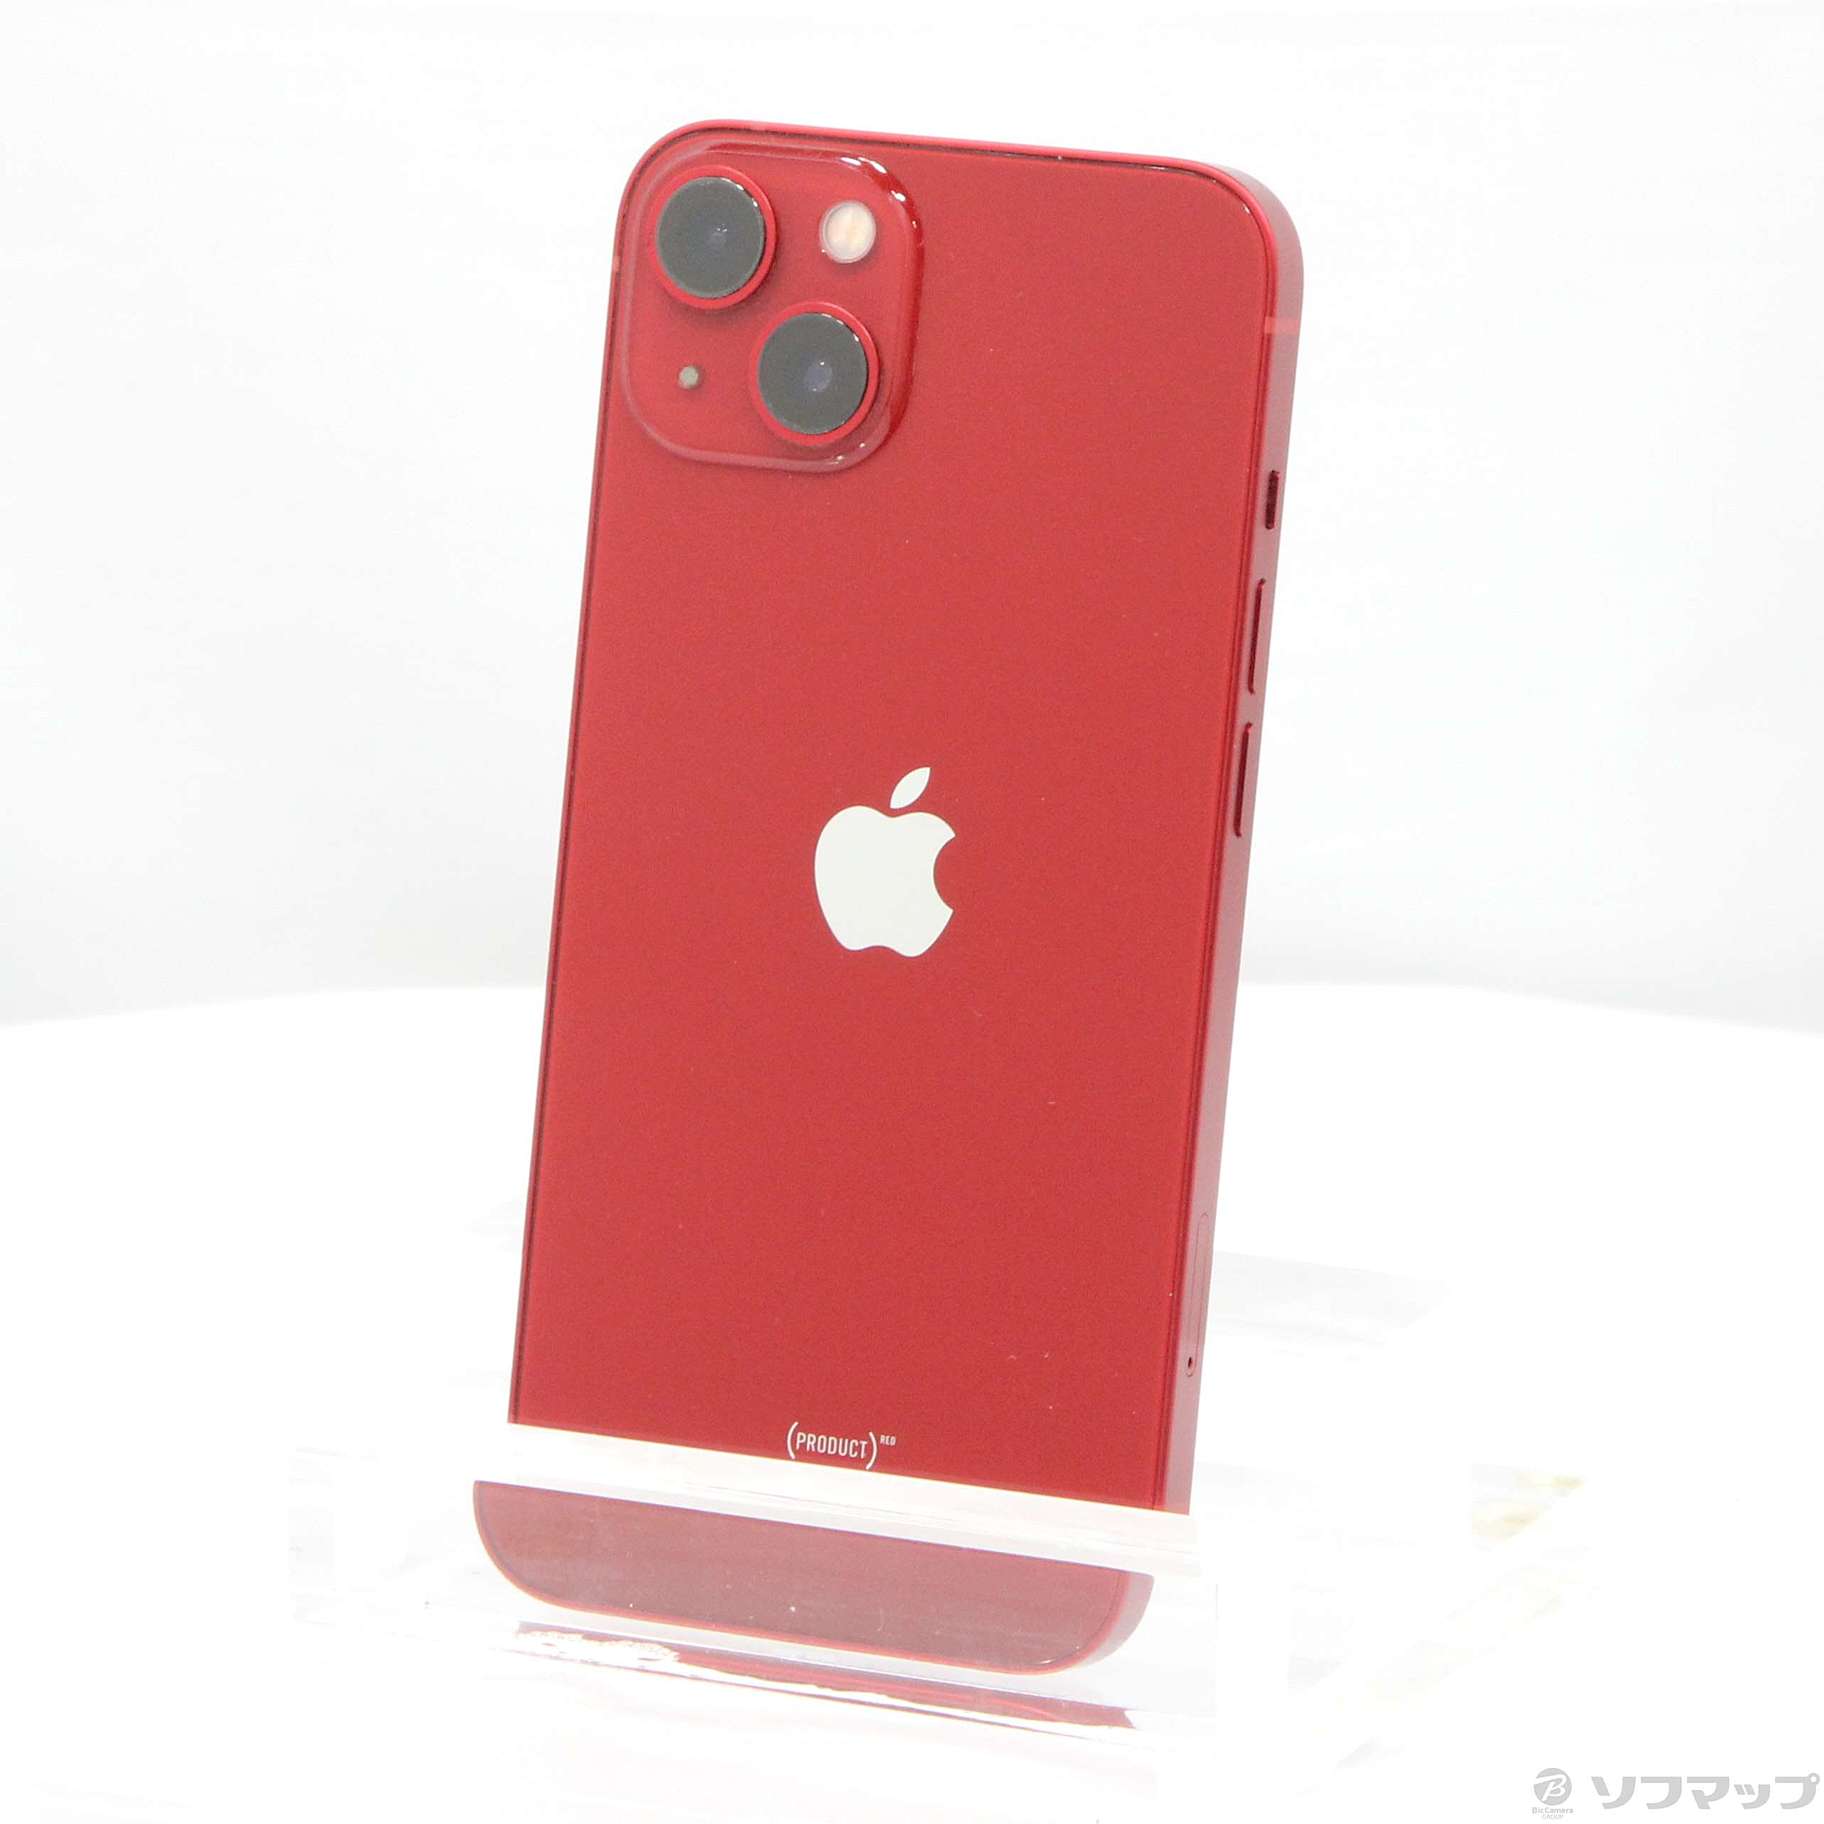 iPhone 13 (PRODUCT)RED 512GB SIMフリー [レッド] 中古(白ロム)価格 